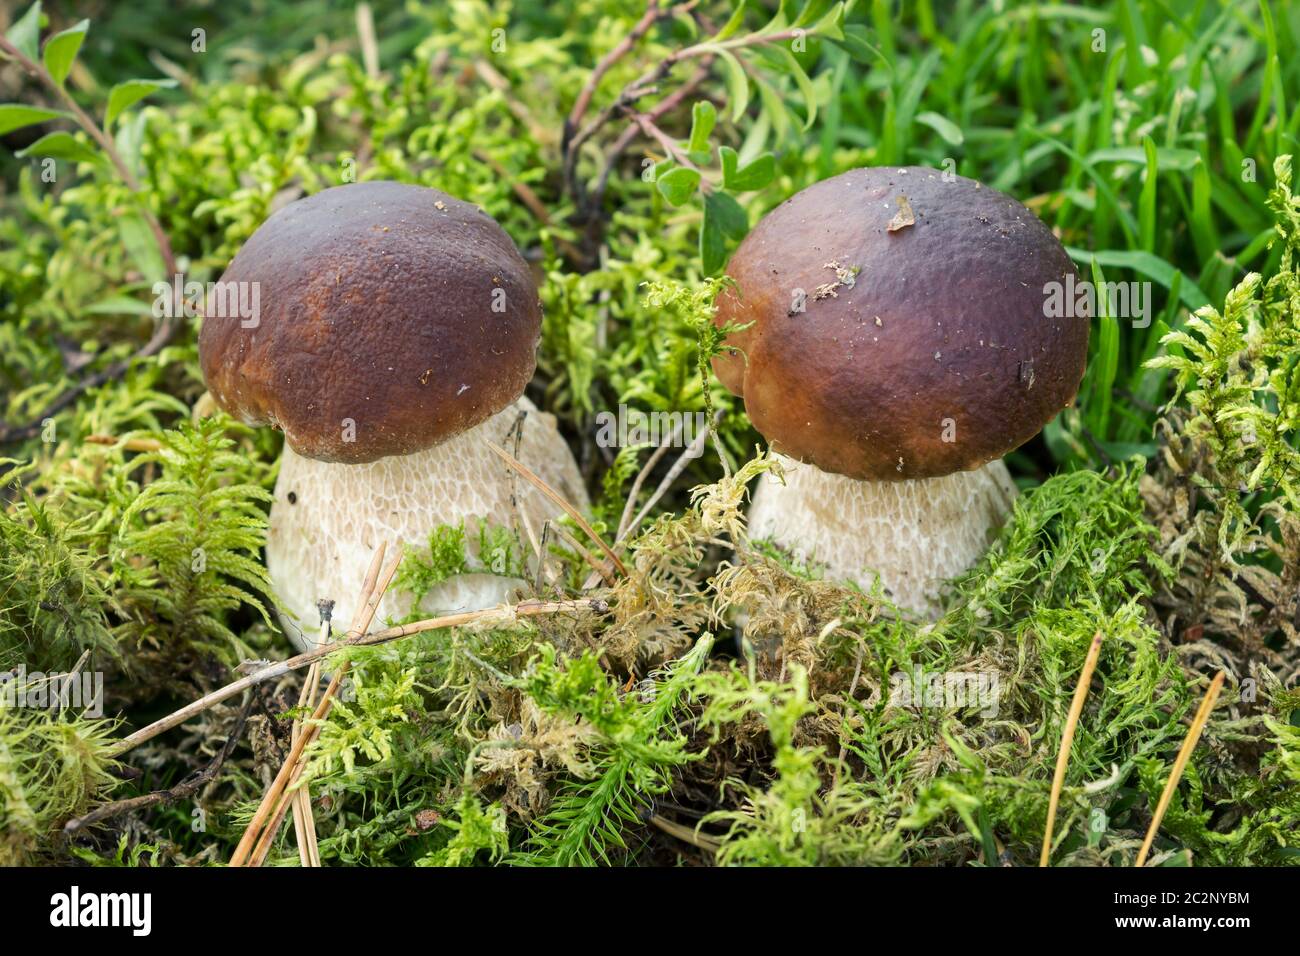 Two mushroom boletus looks beautiful among the moss Stock Photo